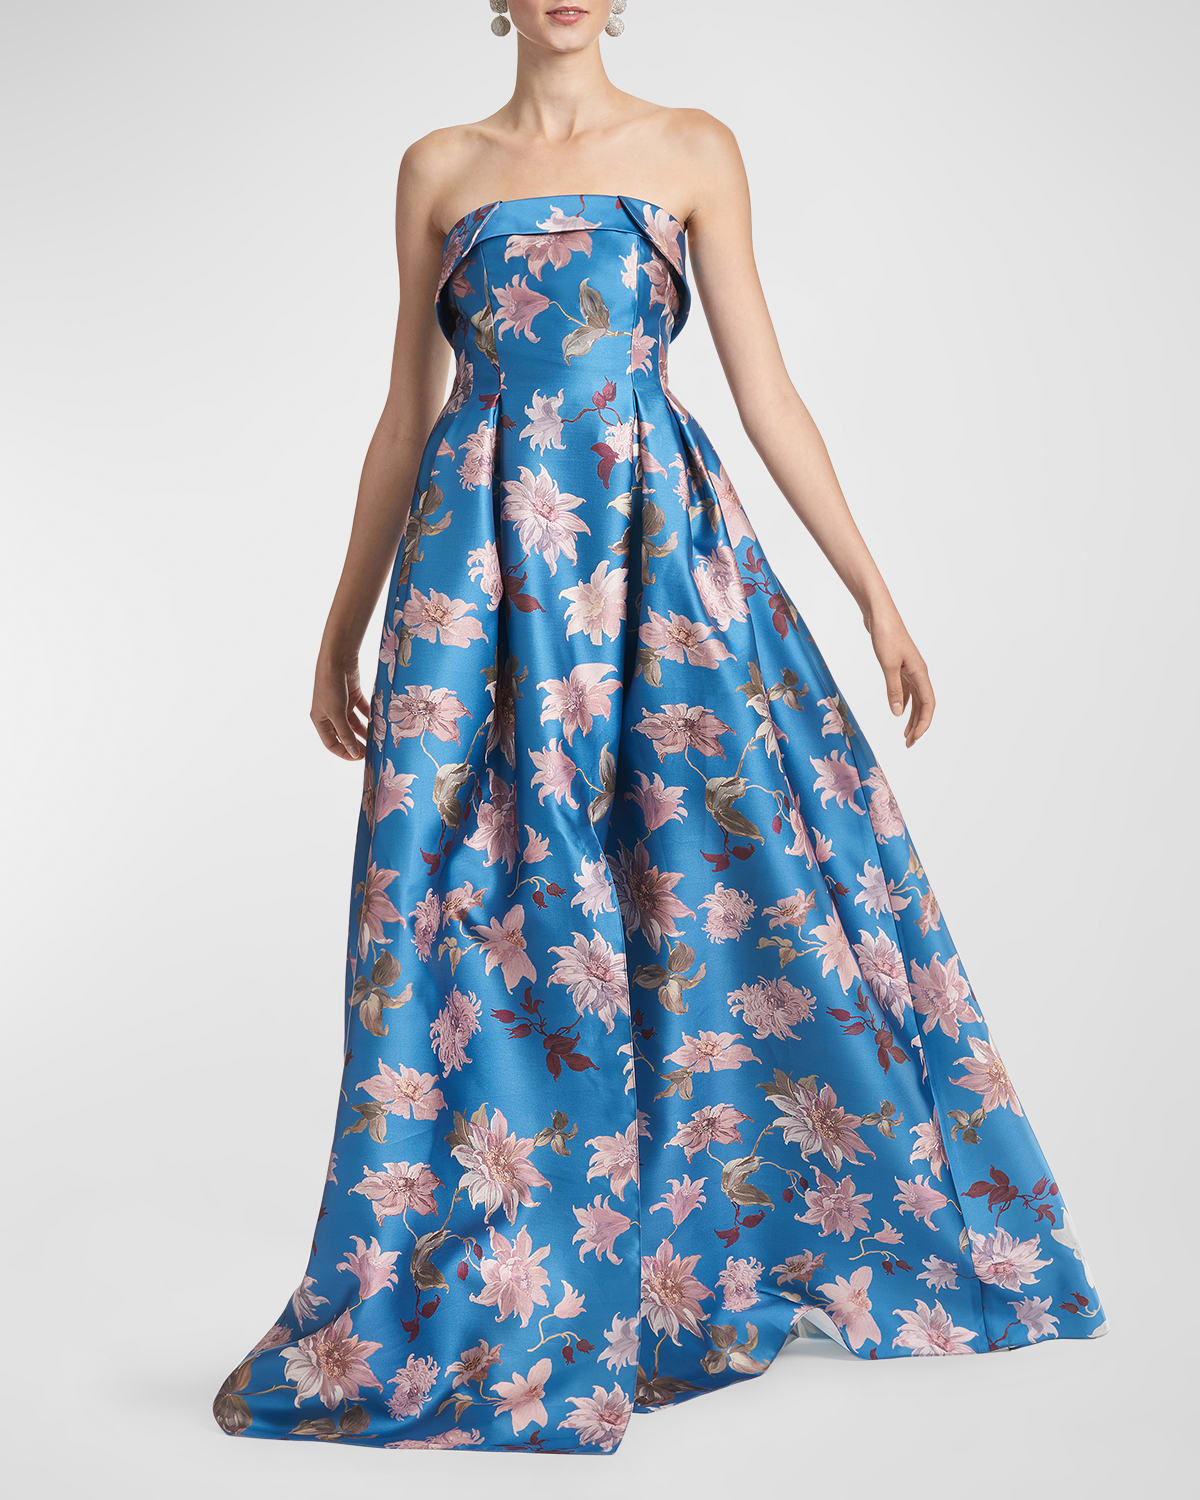 Sachin & Babi Brielle Floral-Print Strapless Gown | Neiman Marcus